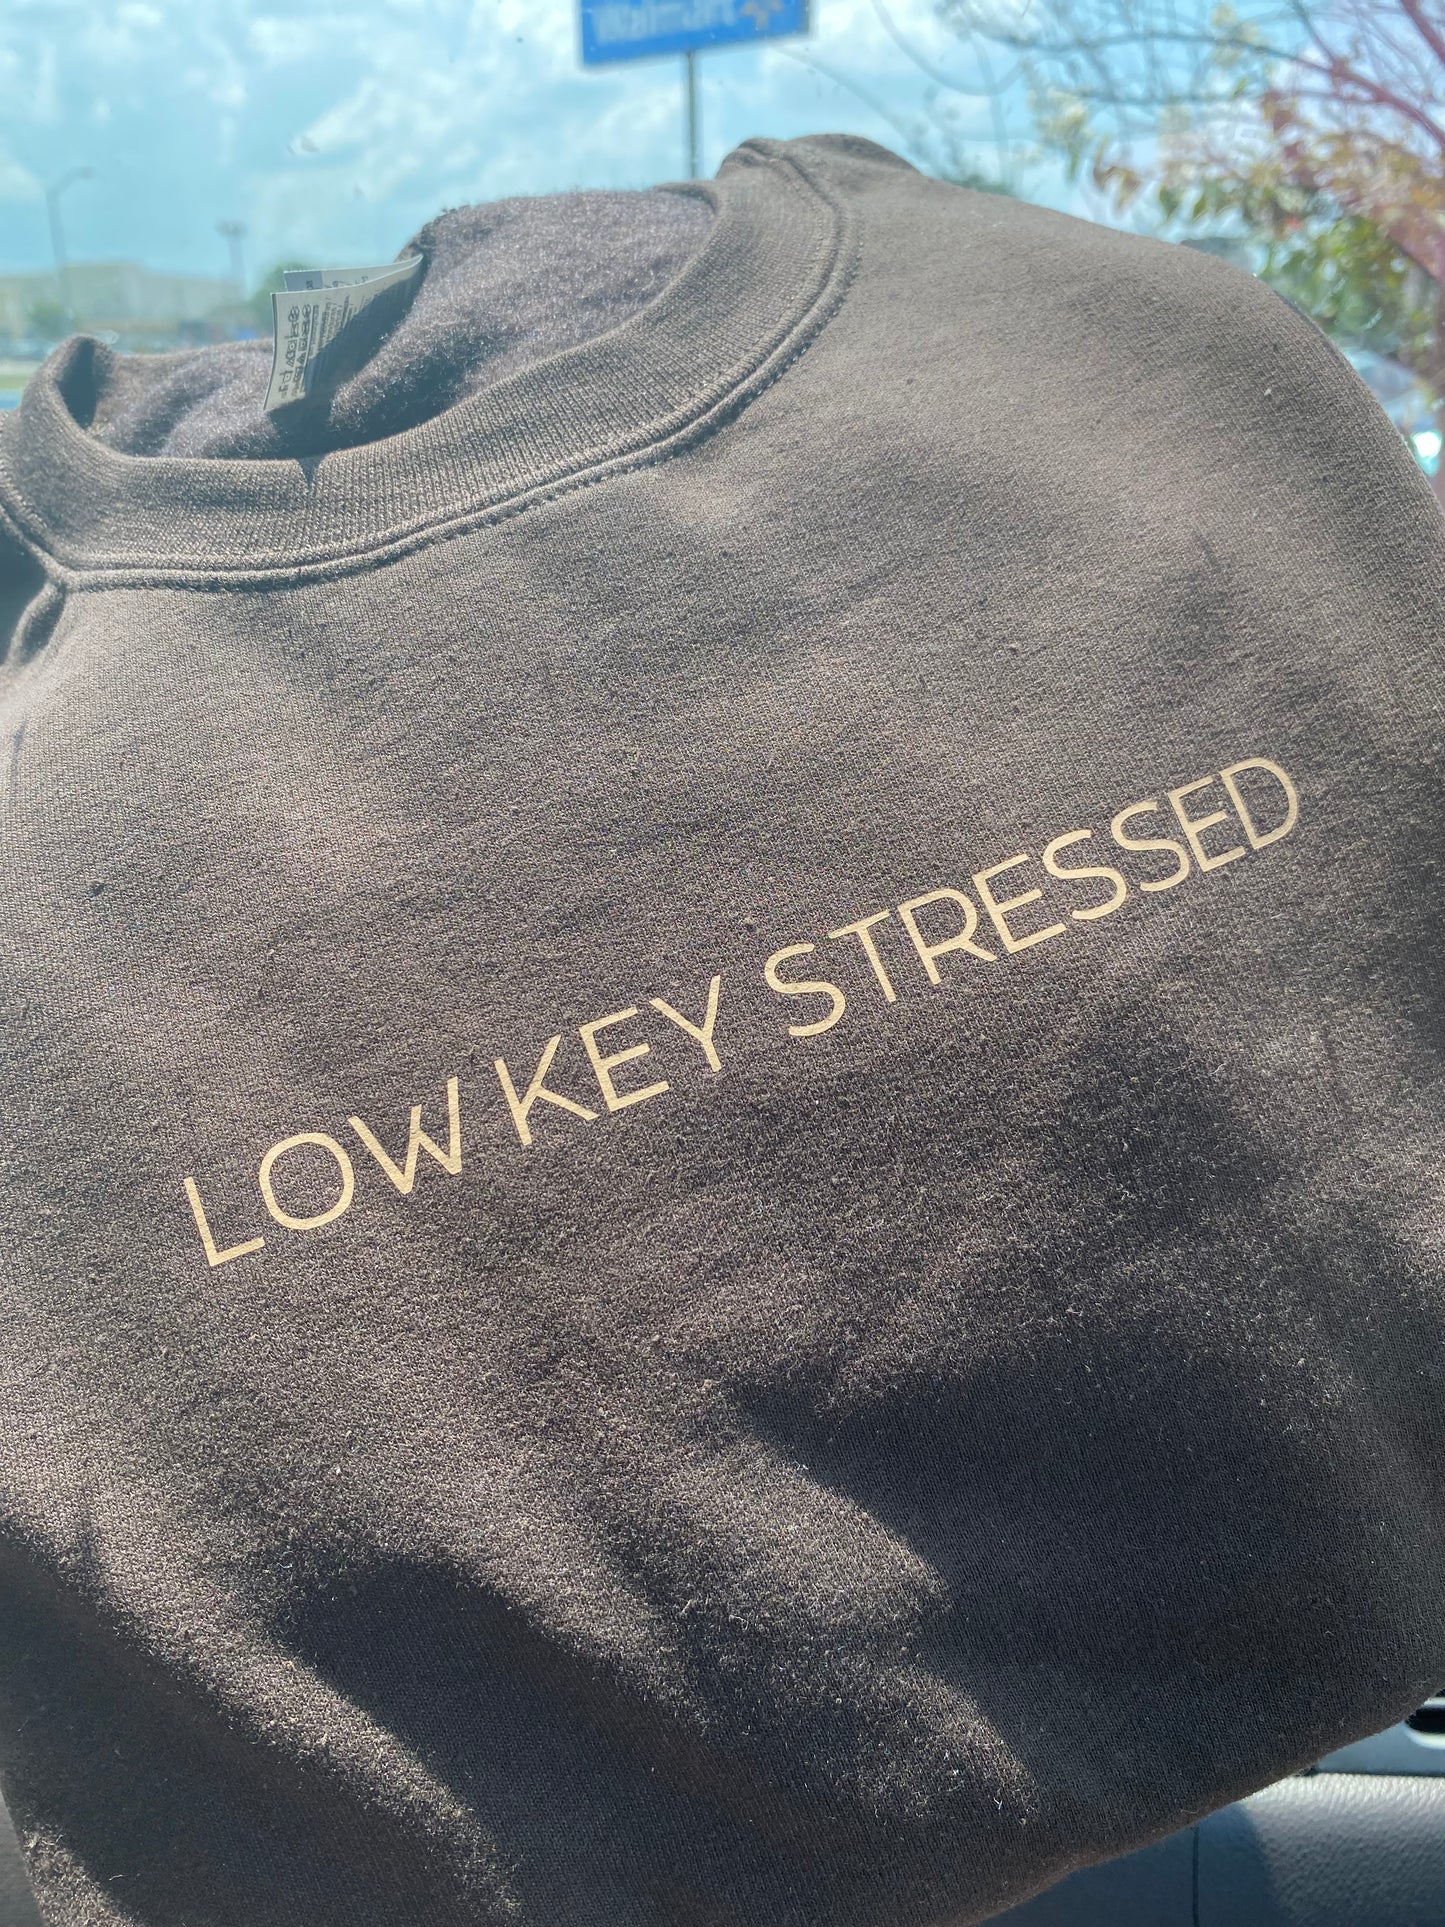 Low Key Stressed Sweatshirt